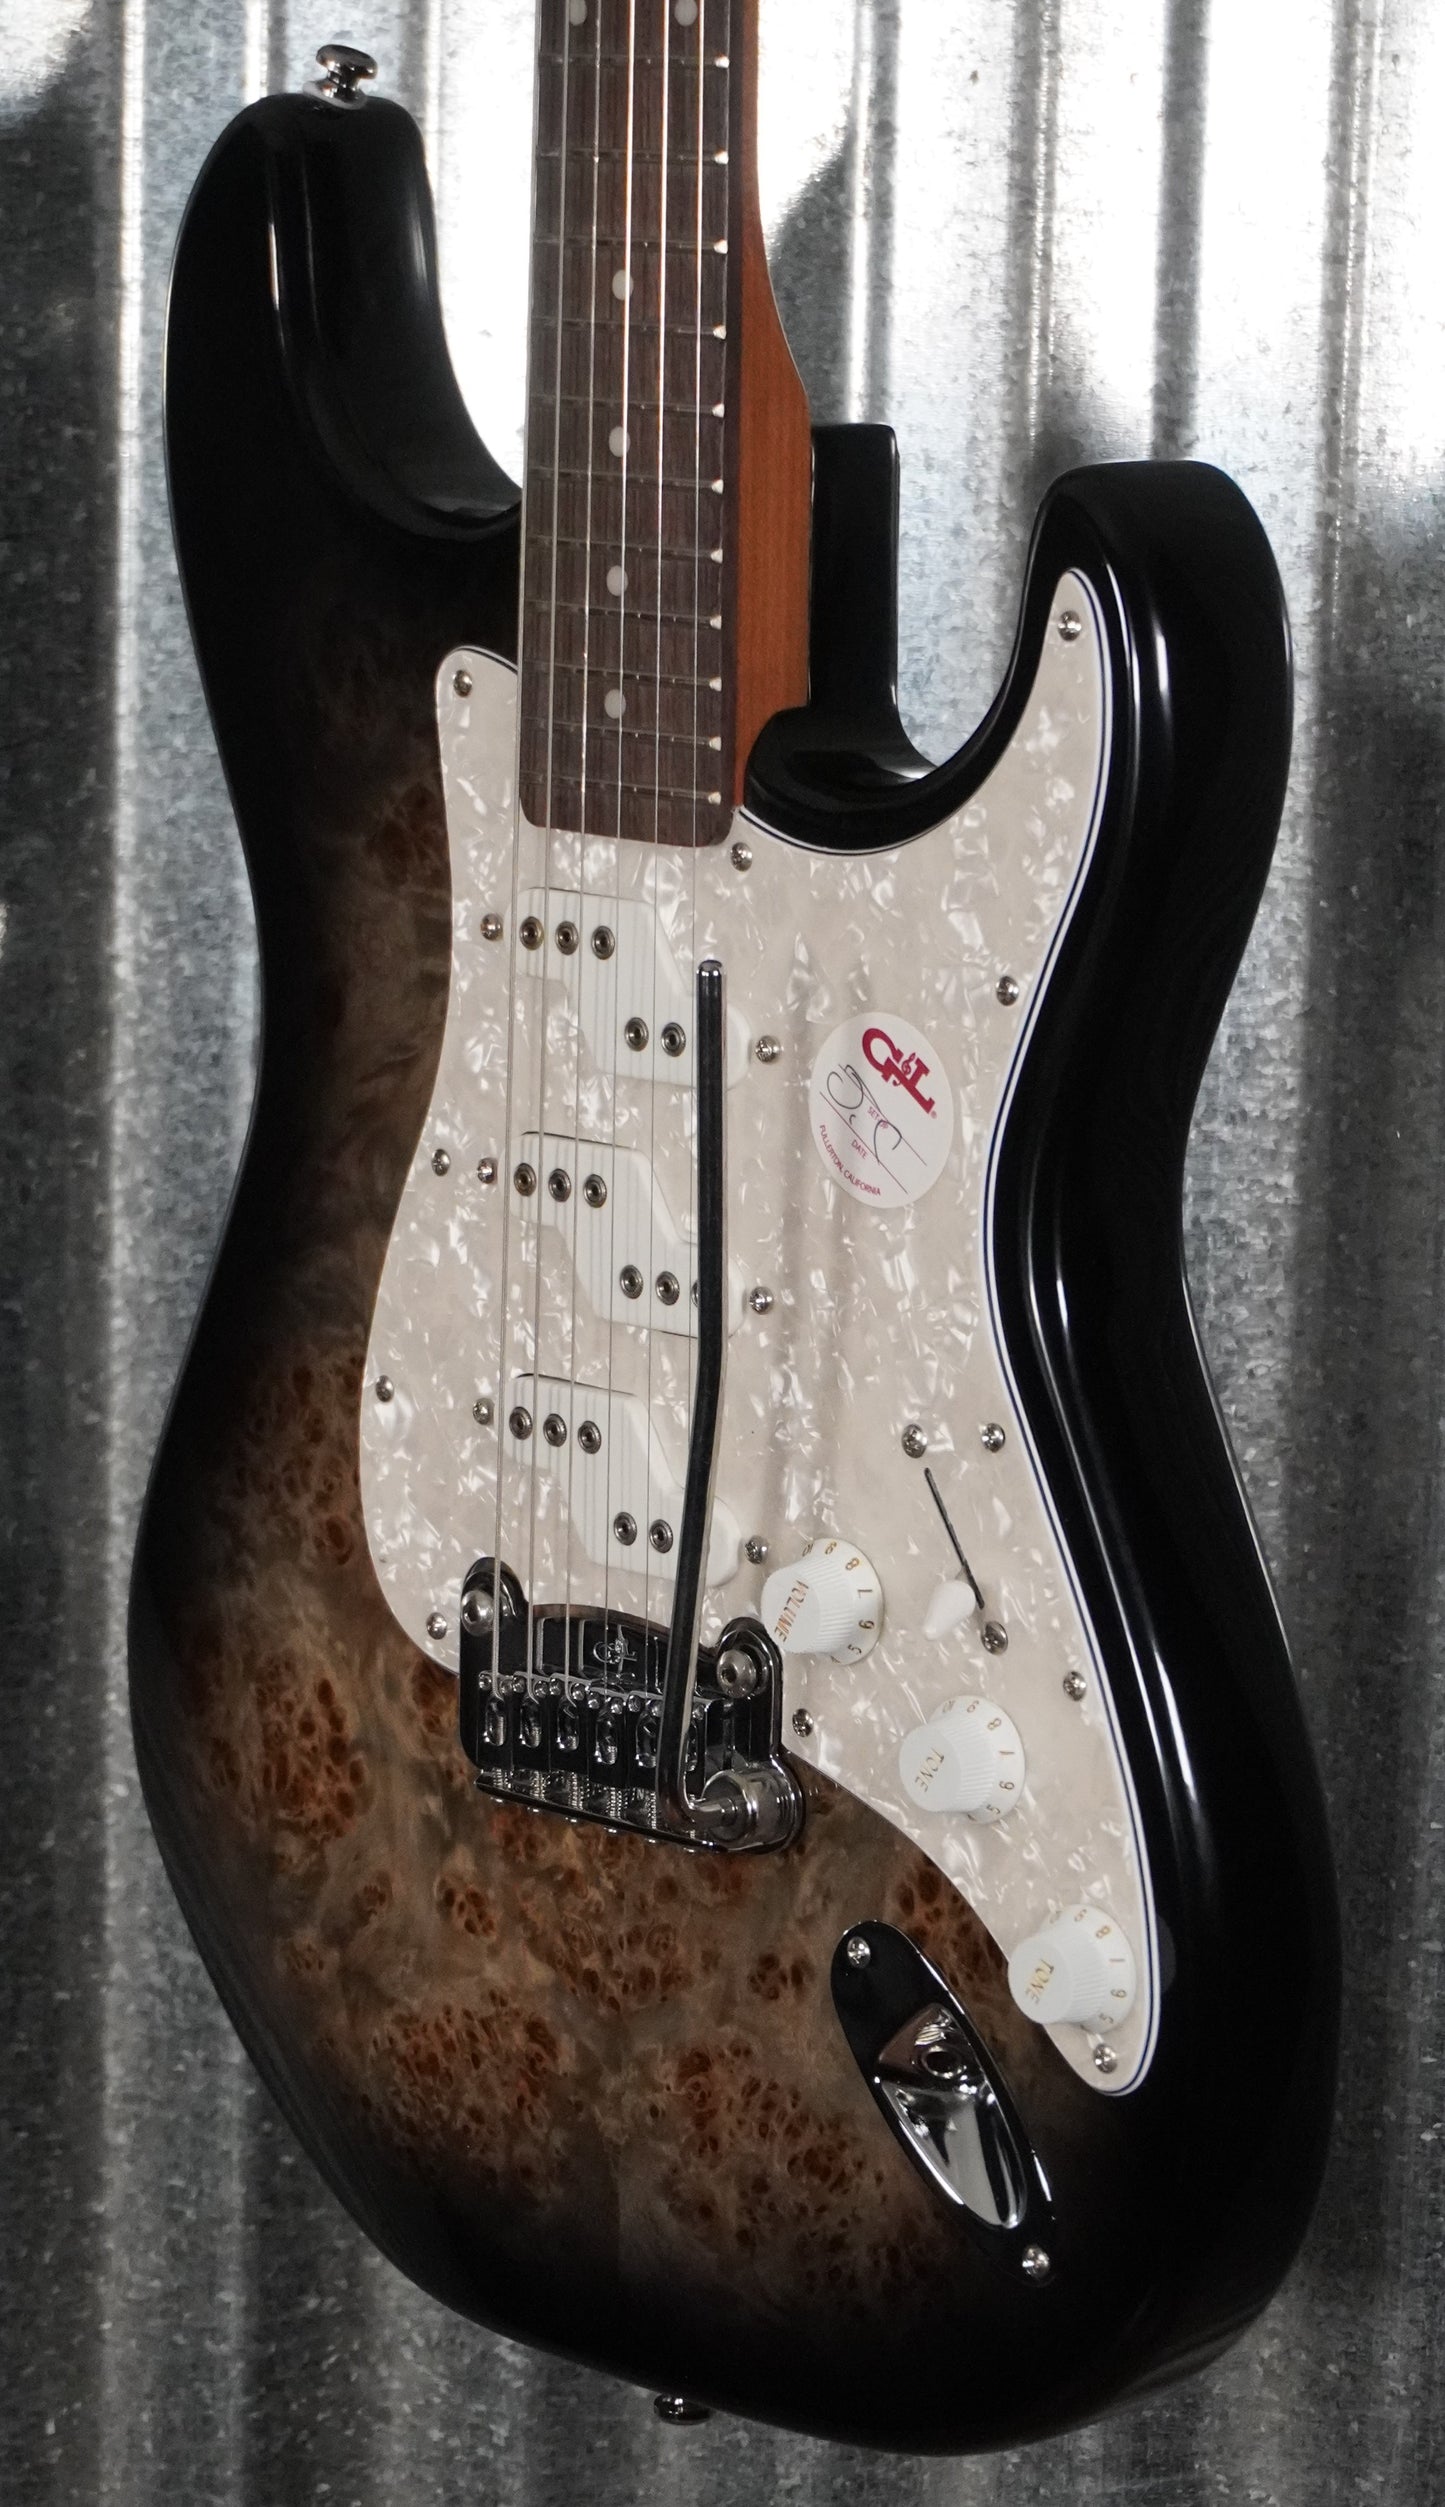 G&L Tribute Comanche Limited Edition Blackburst Burl Guitar #0796